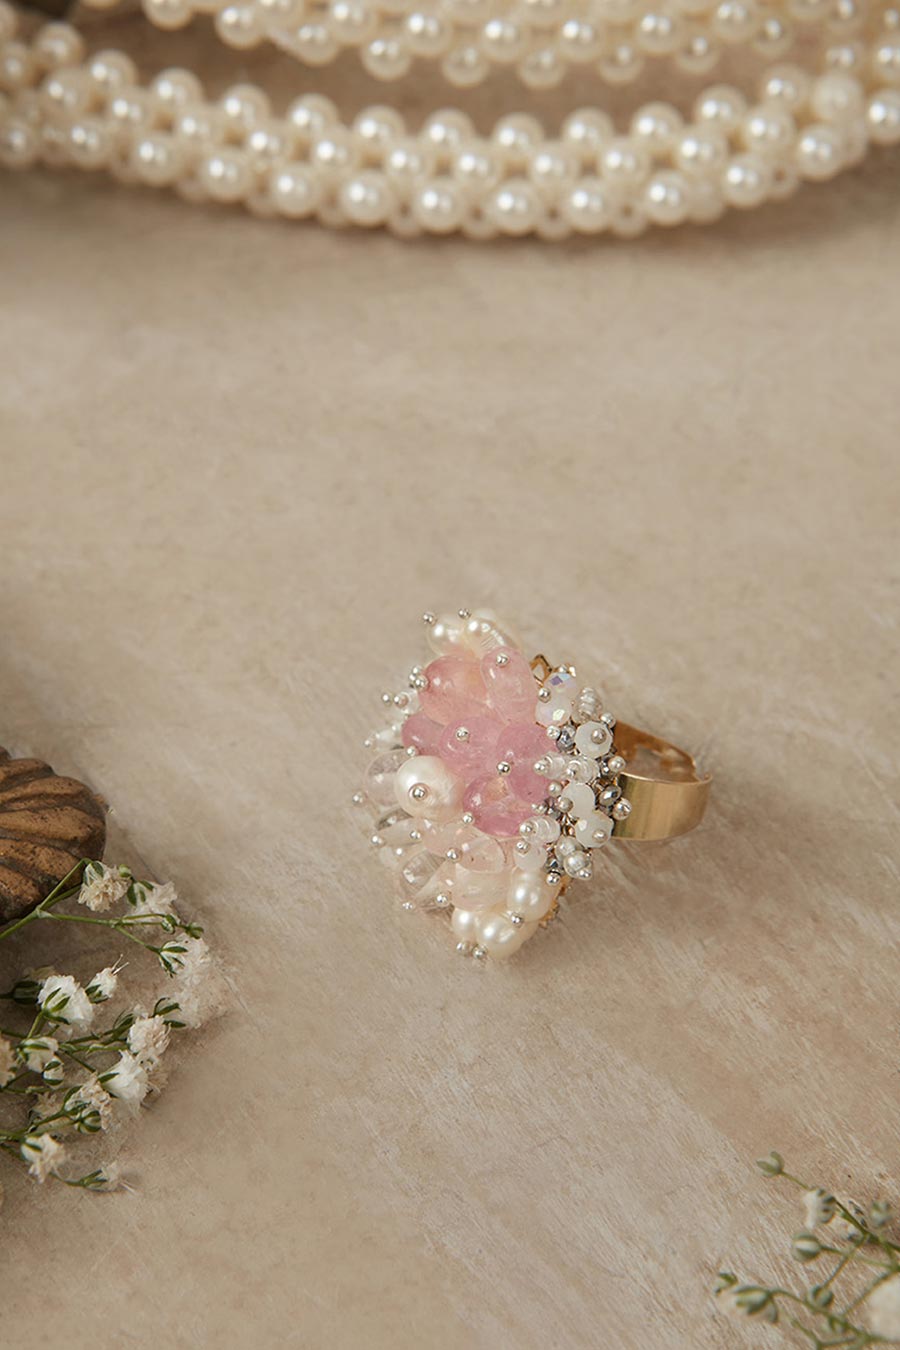 Pink Semi-Precious Stone Ring